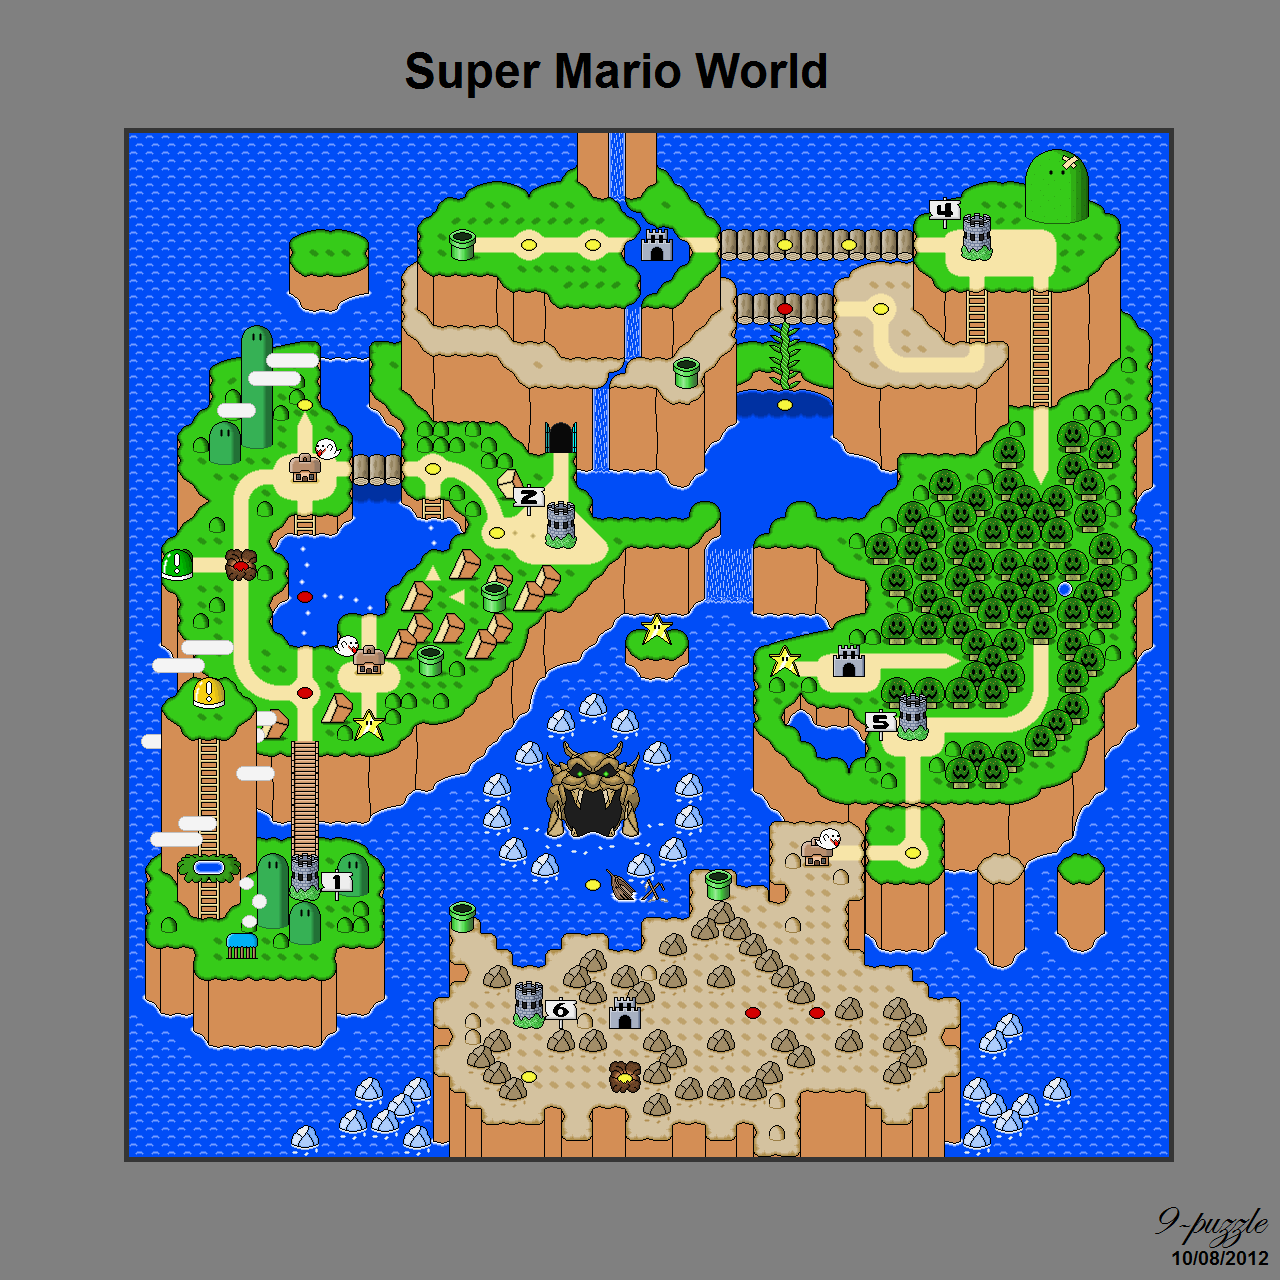 super mario bros world 1-1 map